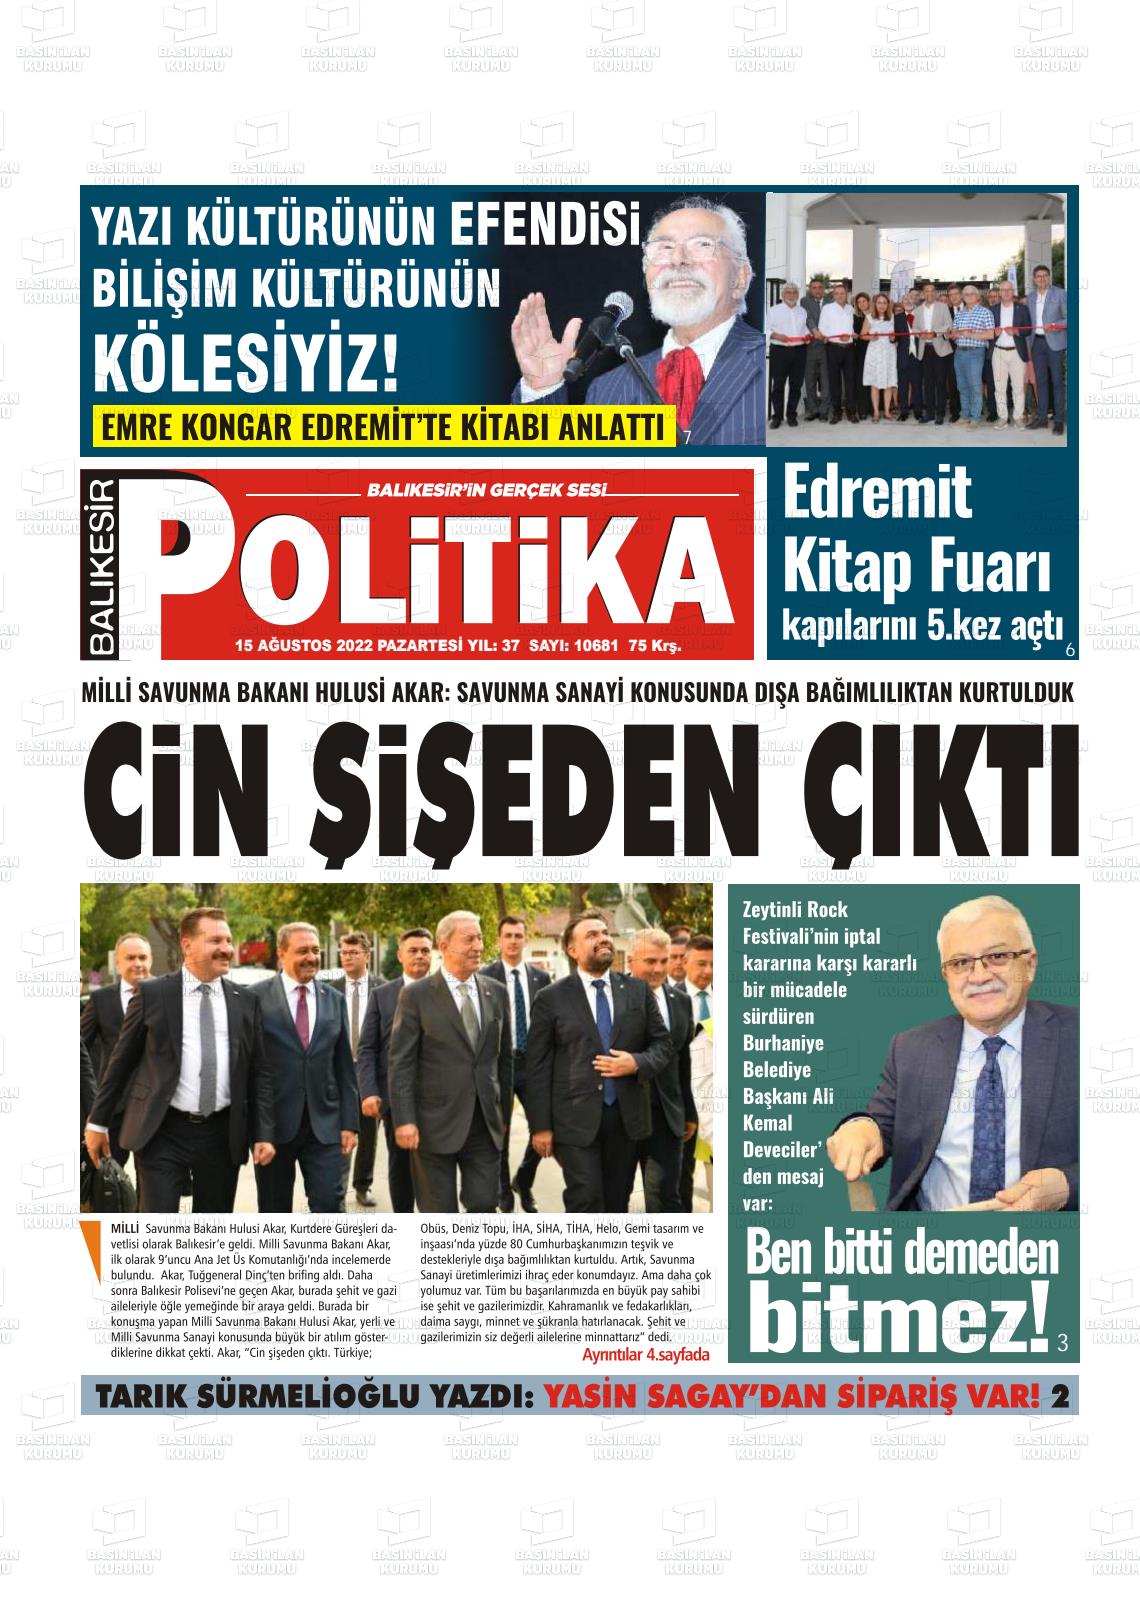 15 Ağustos 2022 Balıkesir Politika Gazete Manşeti